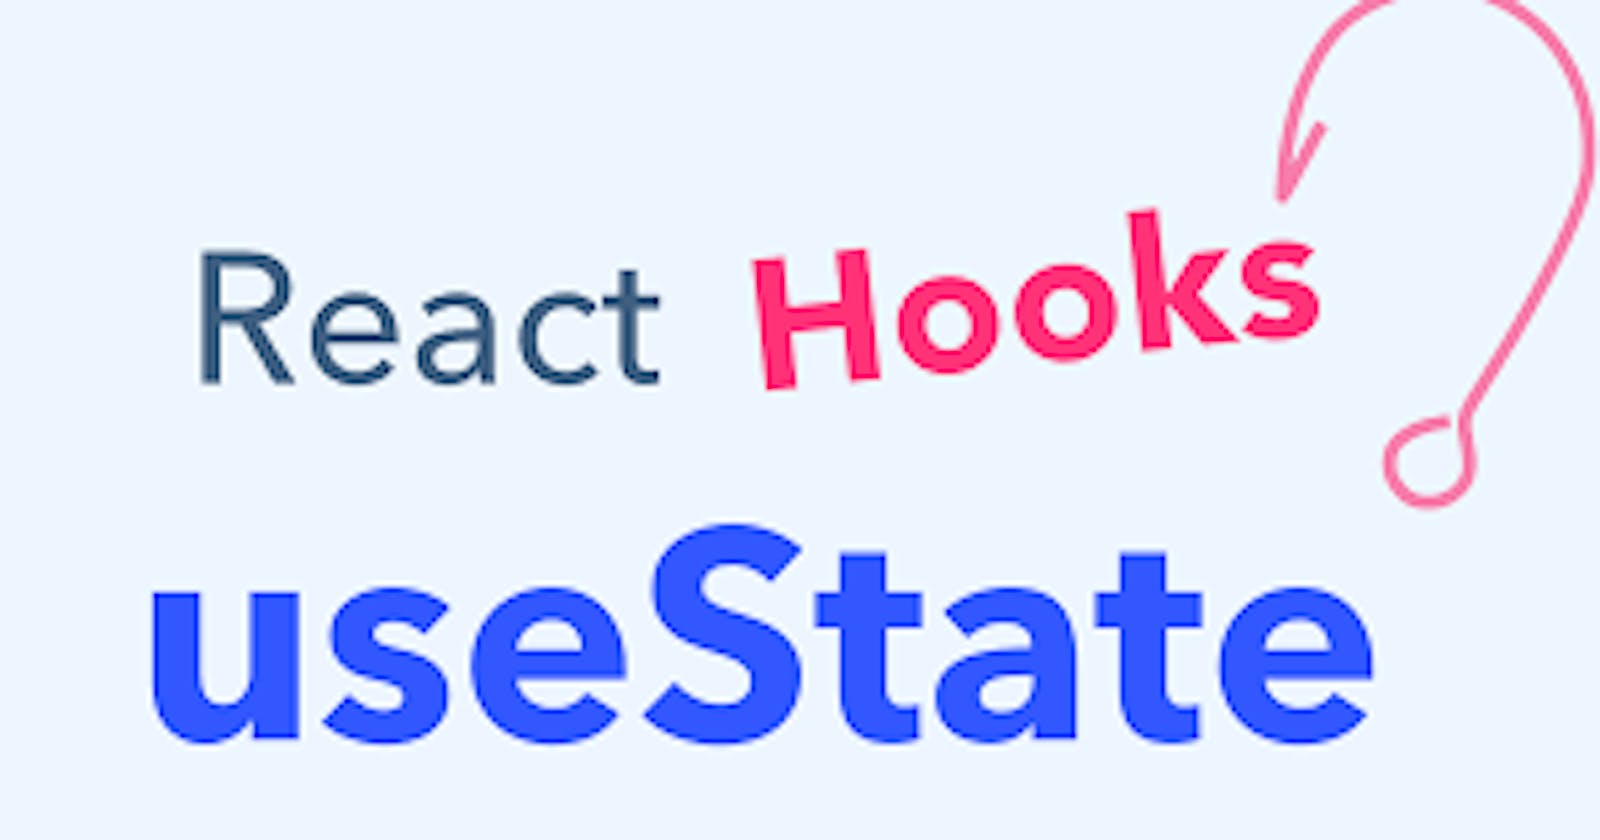 Understanding UseState in React